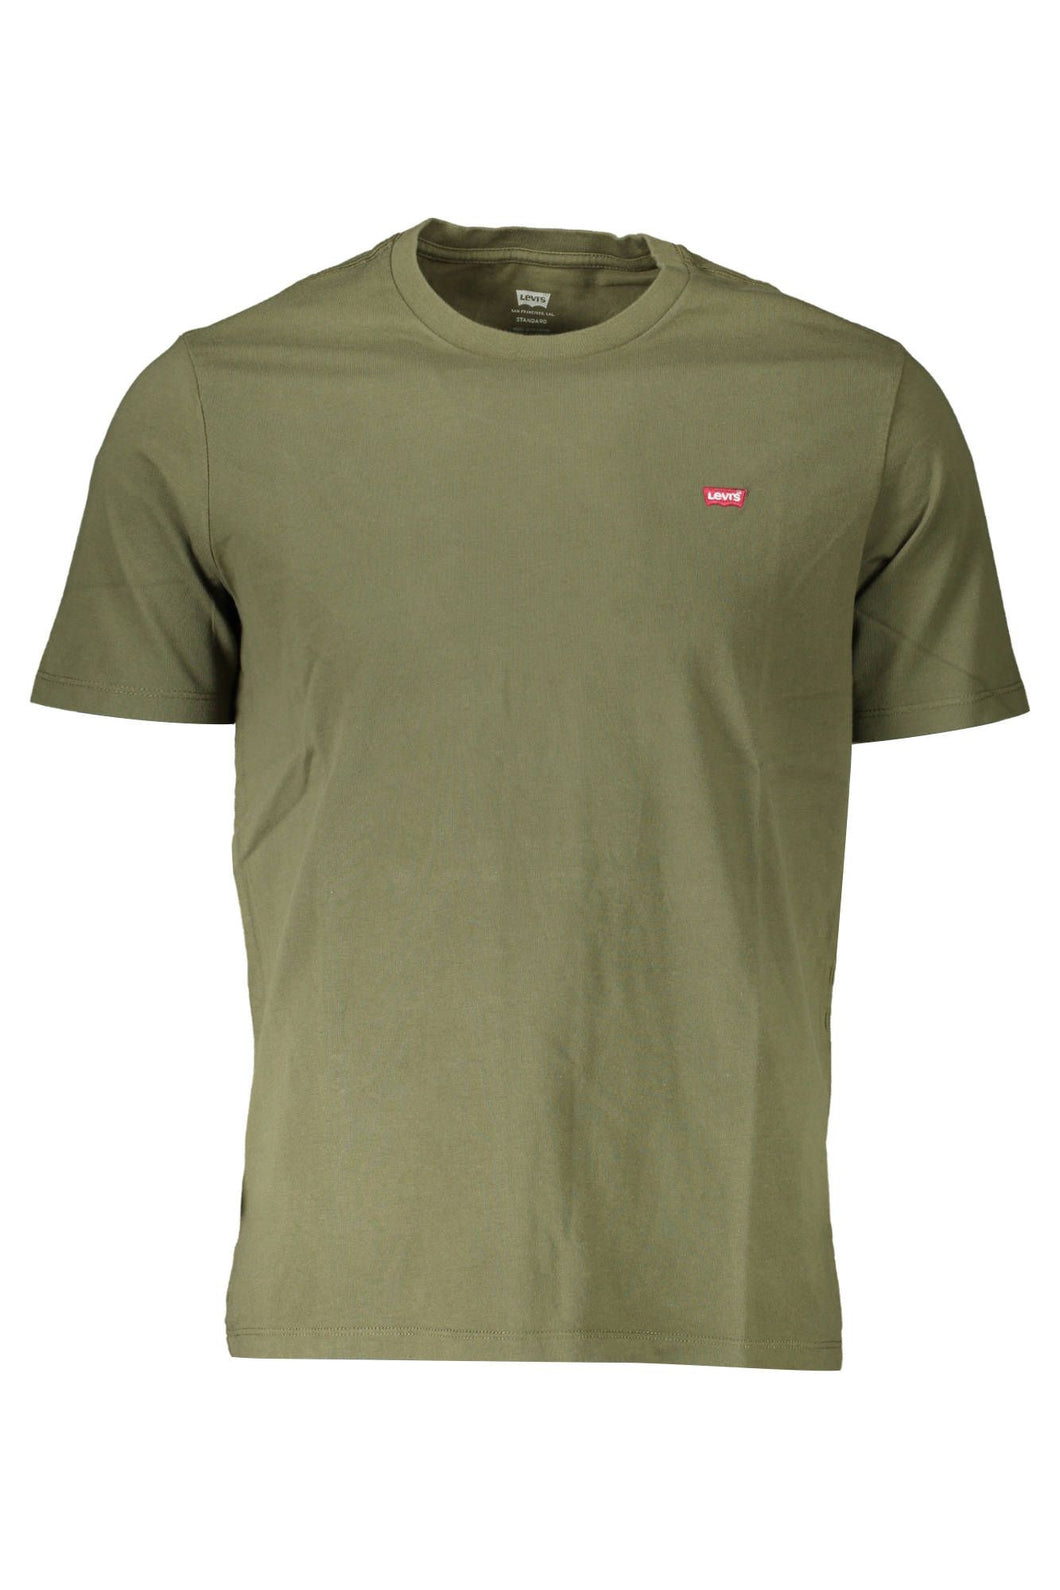 Levi's Green Cotton T-Shirt